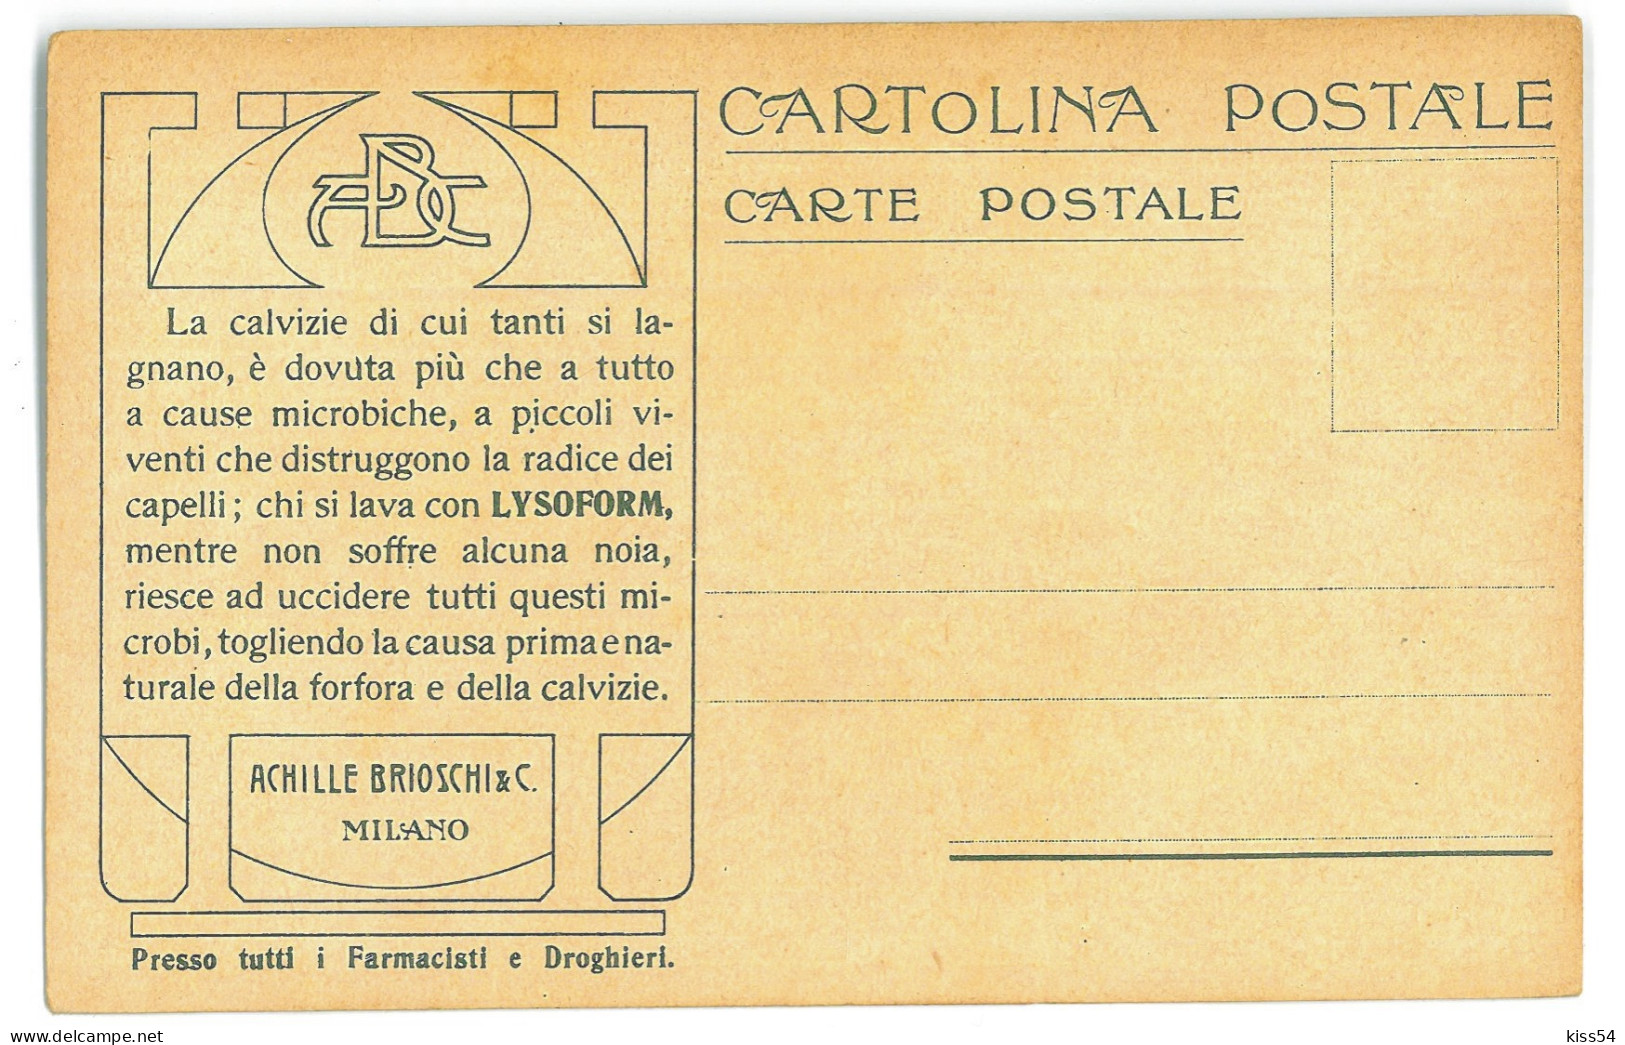 RO 52 - 21376 Flag, Carol I Stamp, POSTMAN, BIKE, Ethnic Woman, Litho, Romania - Old Postcard - Unused - Rumania